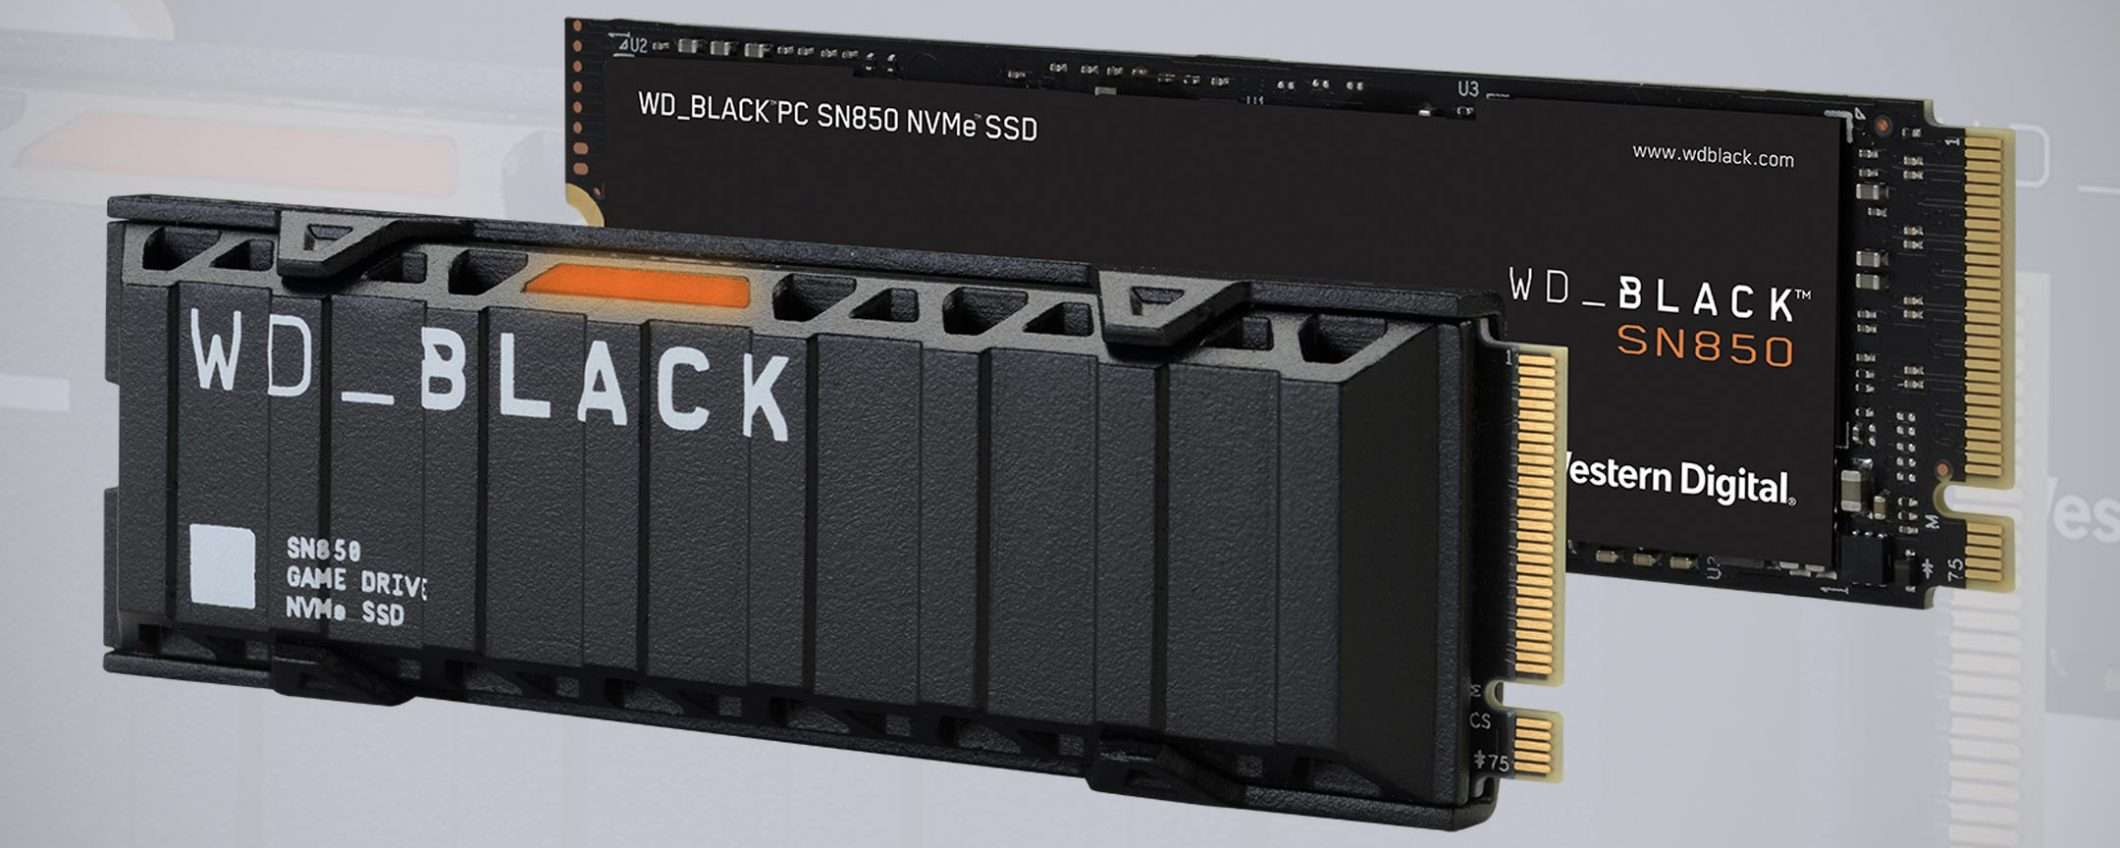 Black SN850 NVMe: la prima SSD PCIe 4 di WD